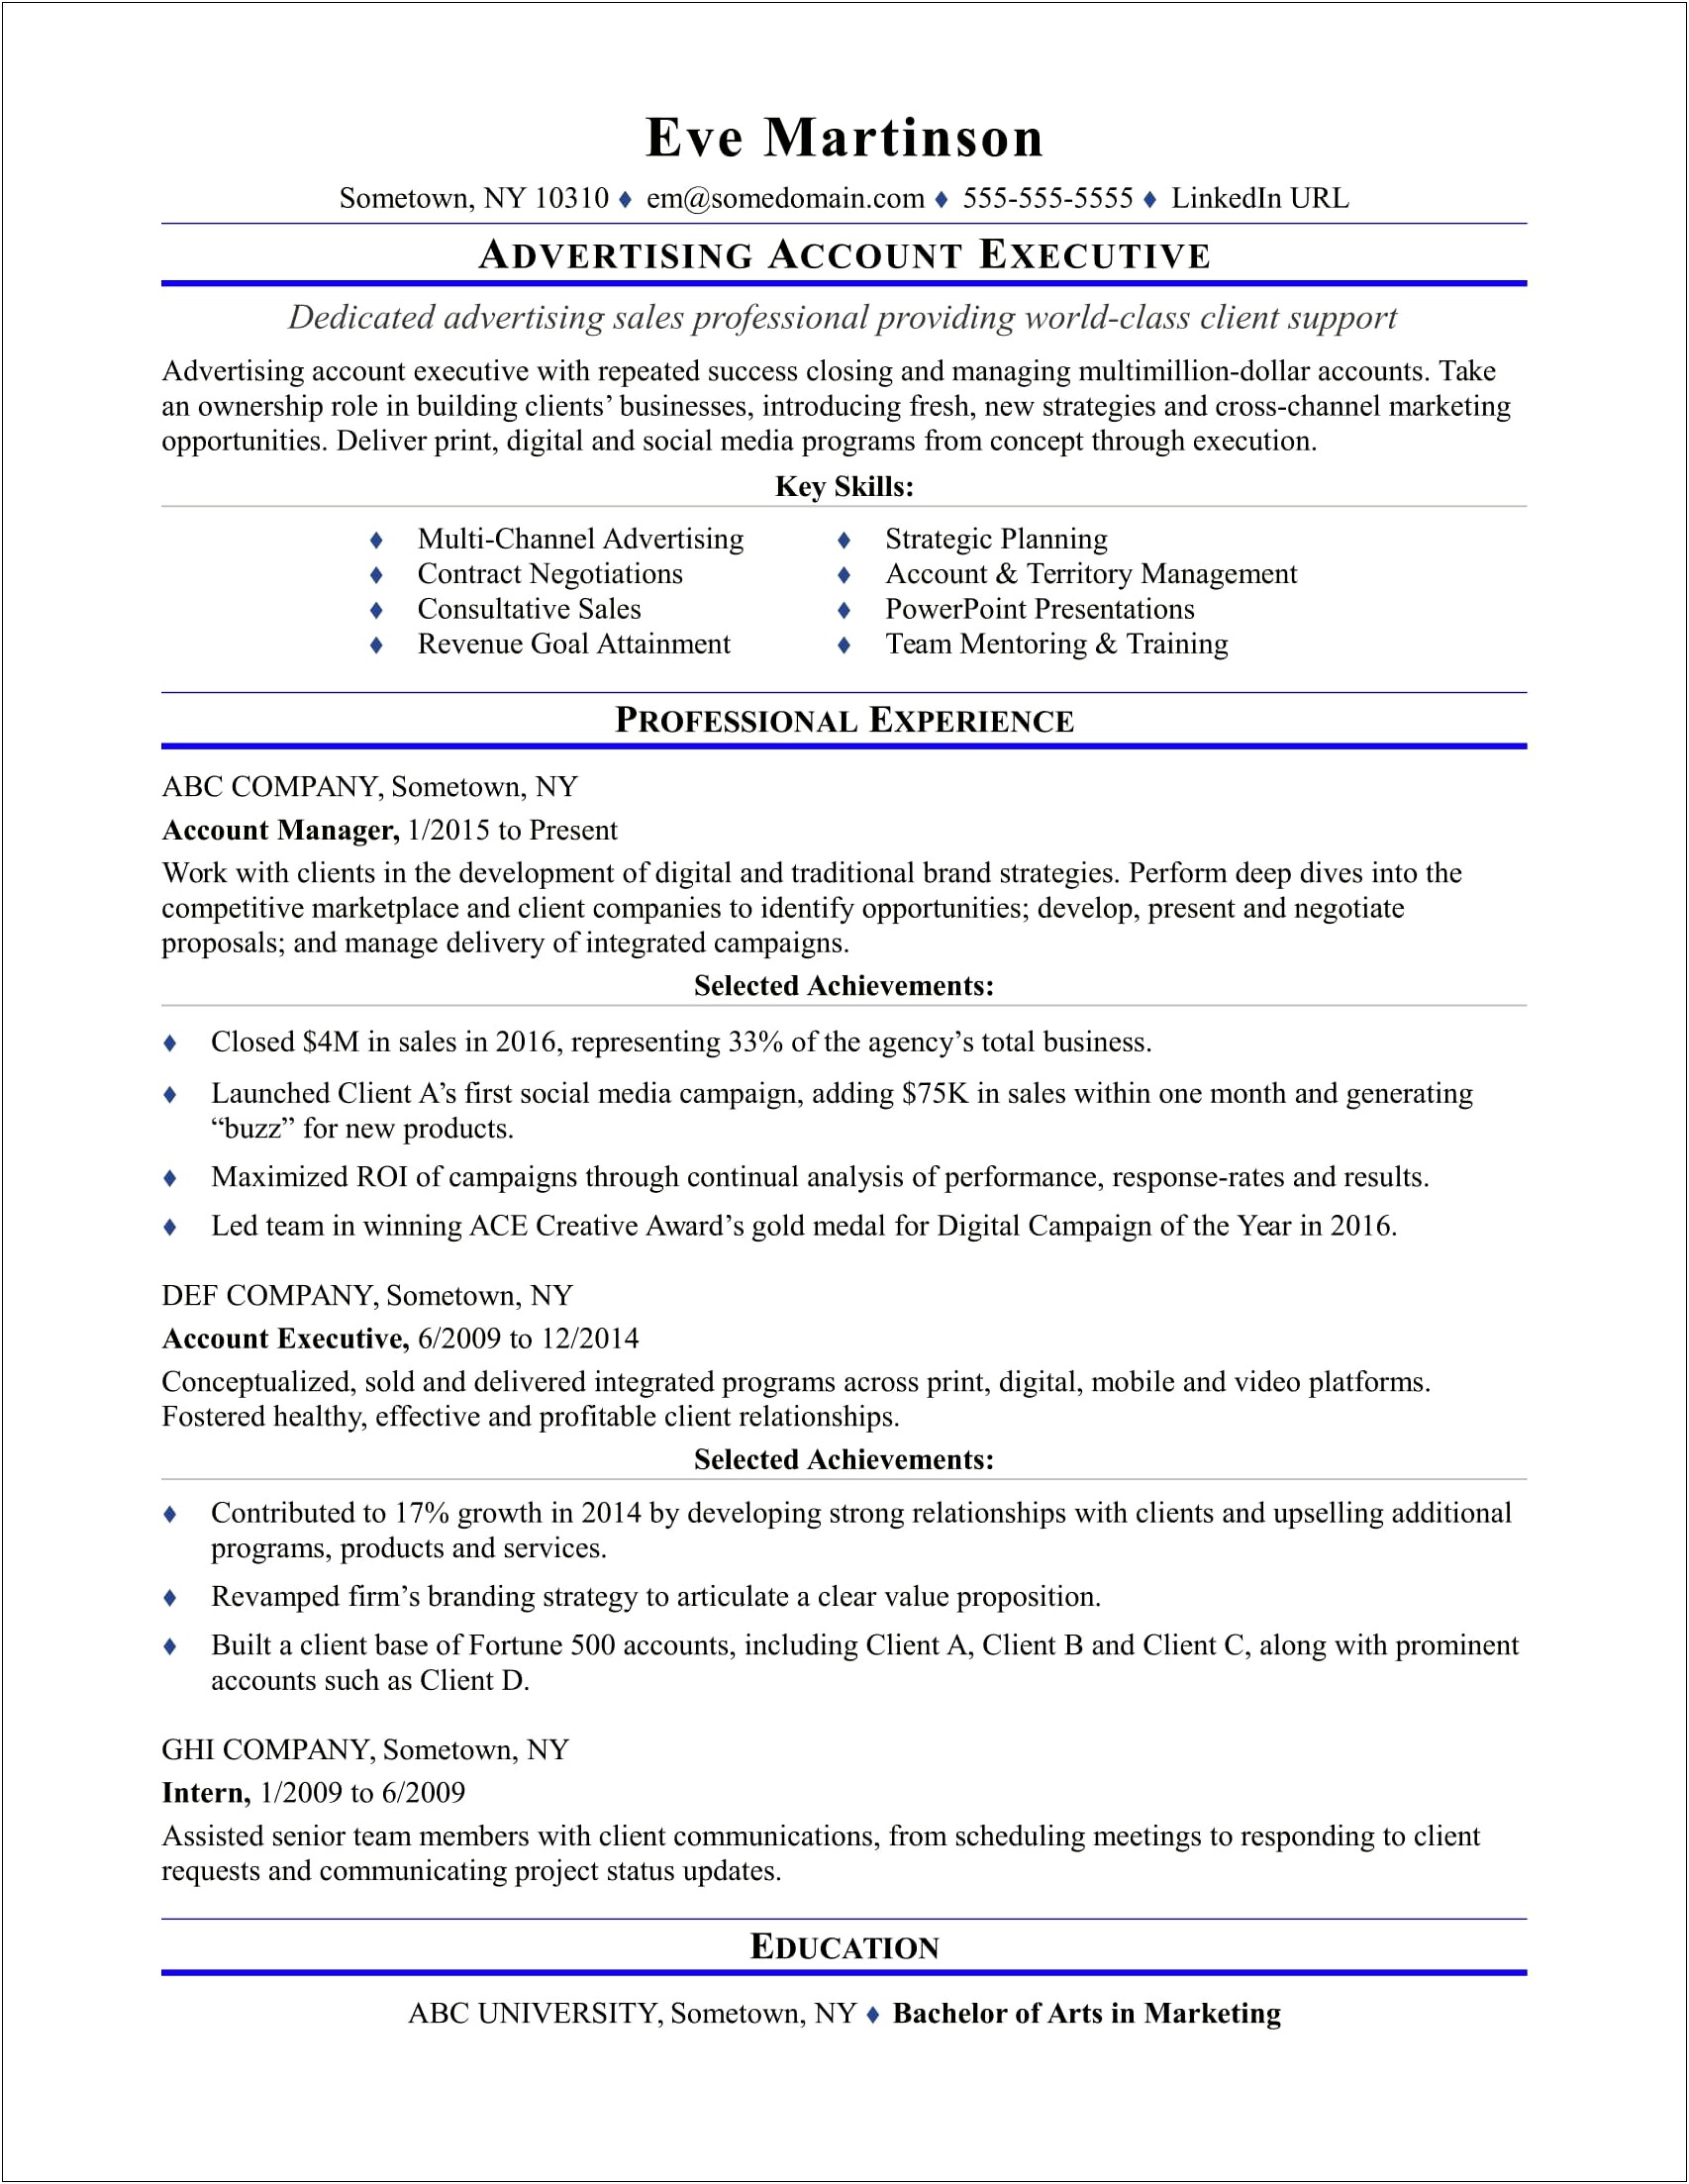 Customer Care Executive Job Description For Resume